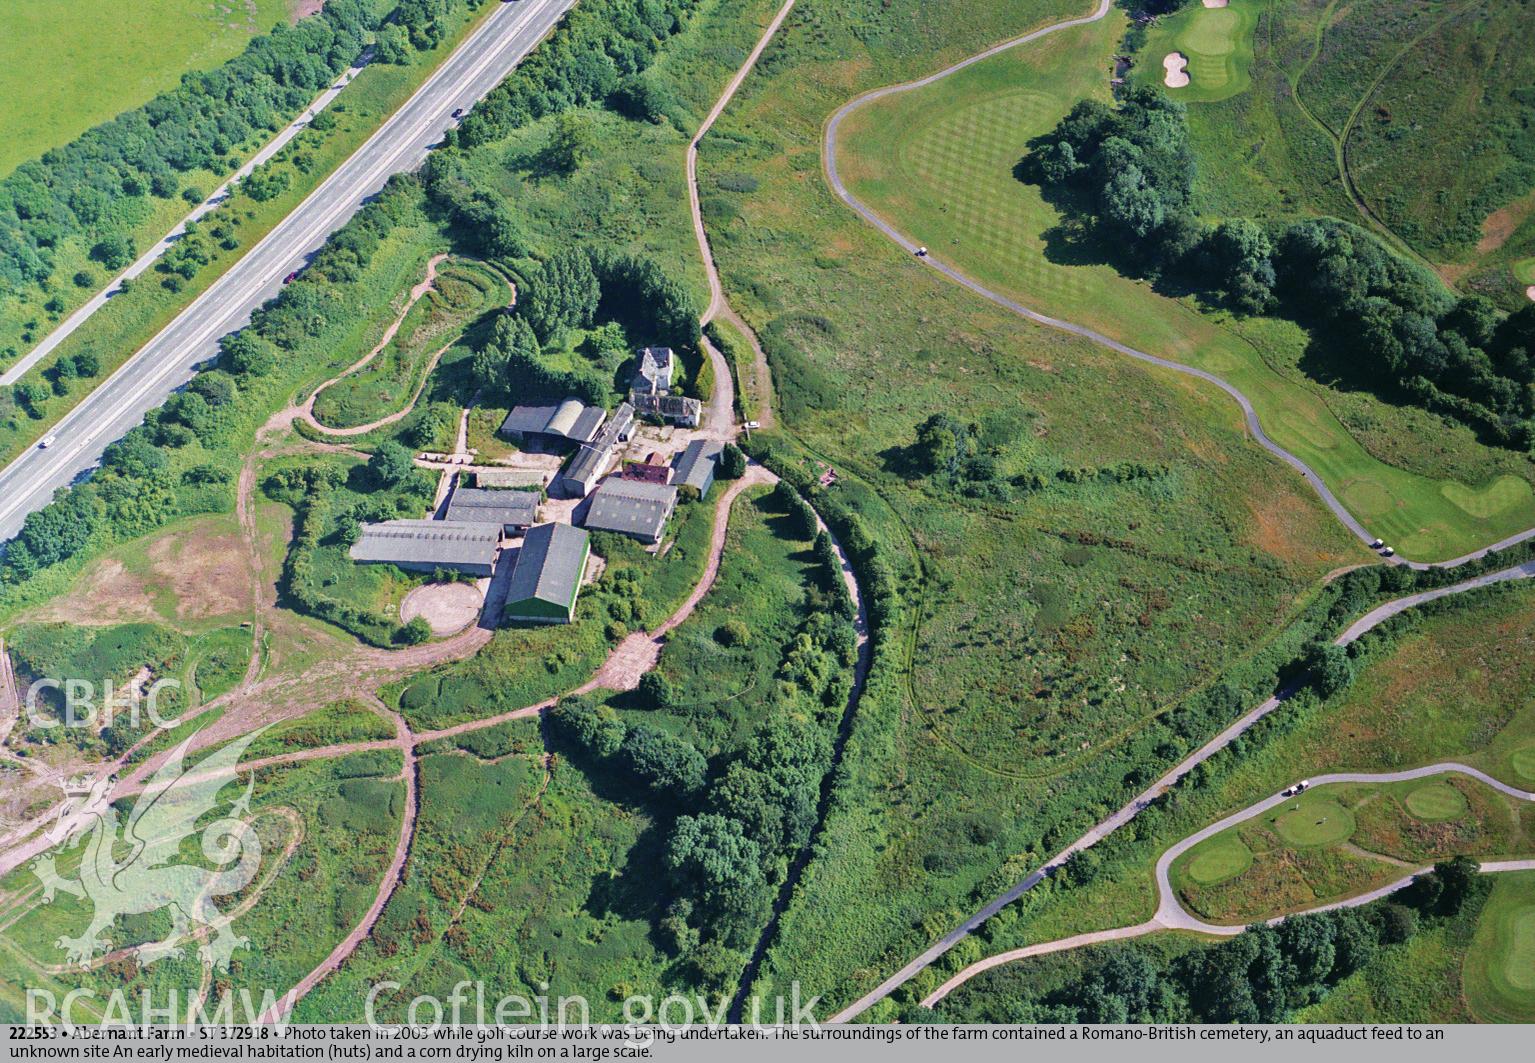 View of Abernant Farm, Caerleon, taken by John Sorrell, 2002